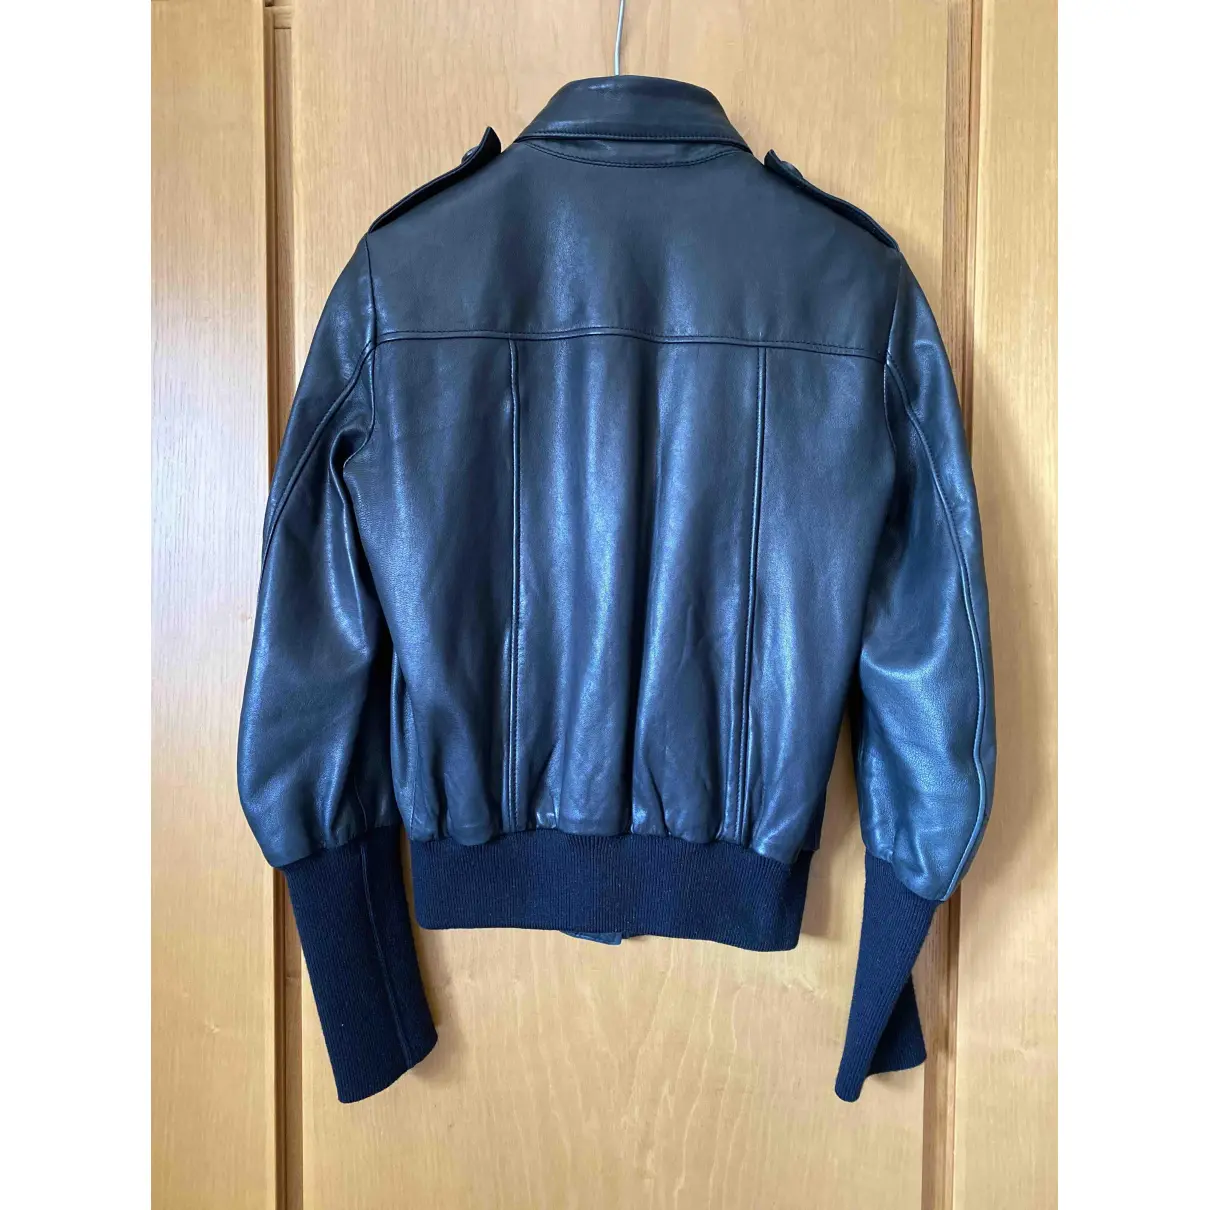 Buy Mauro Grifoni Leather jacket online